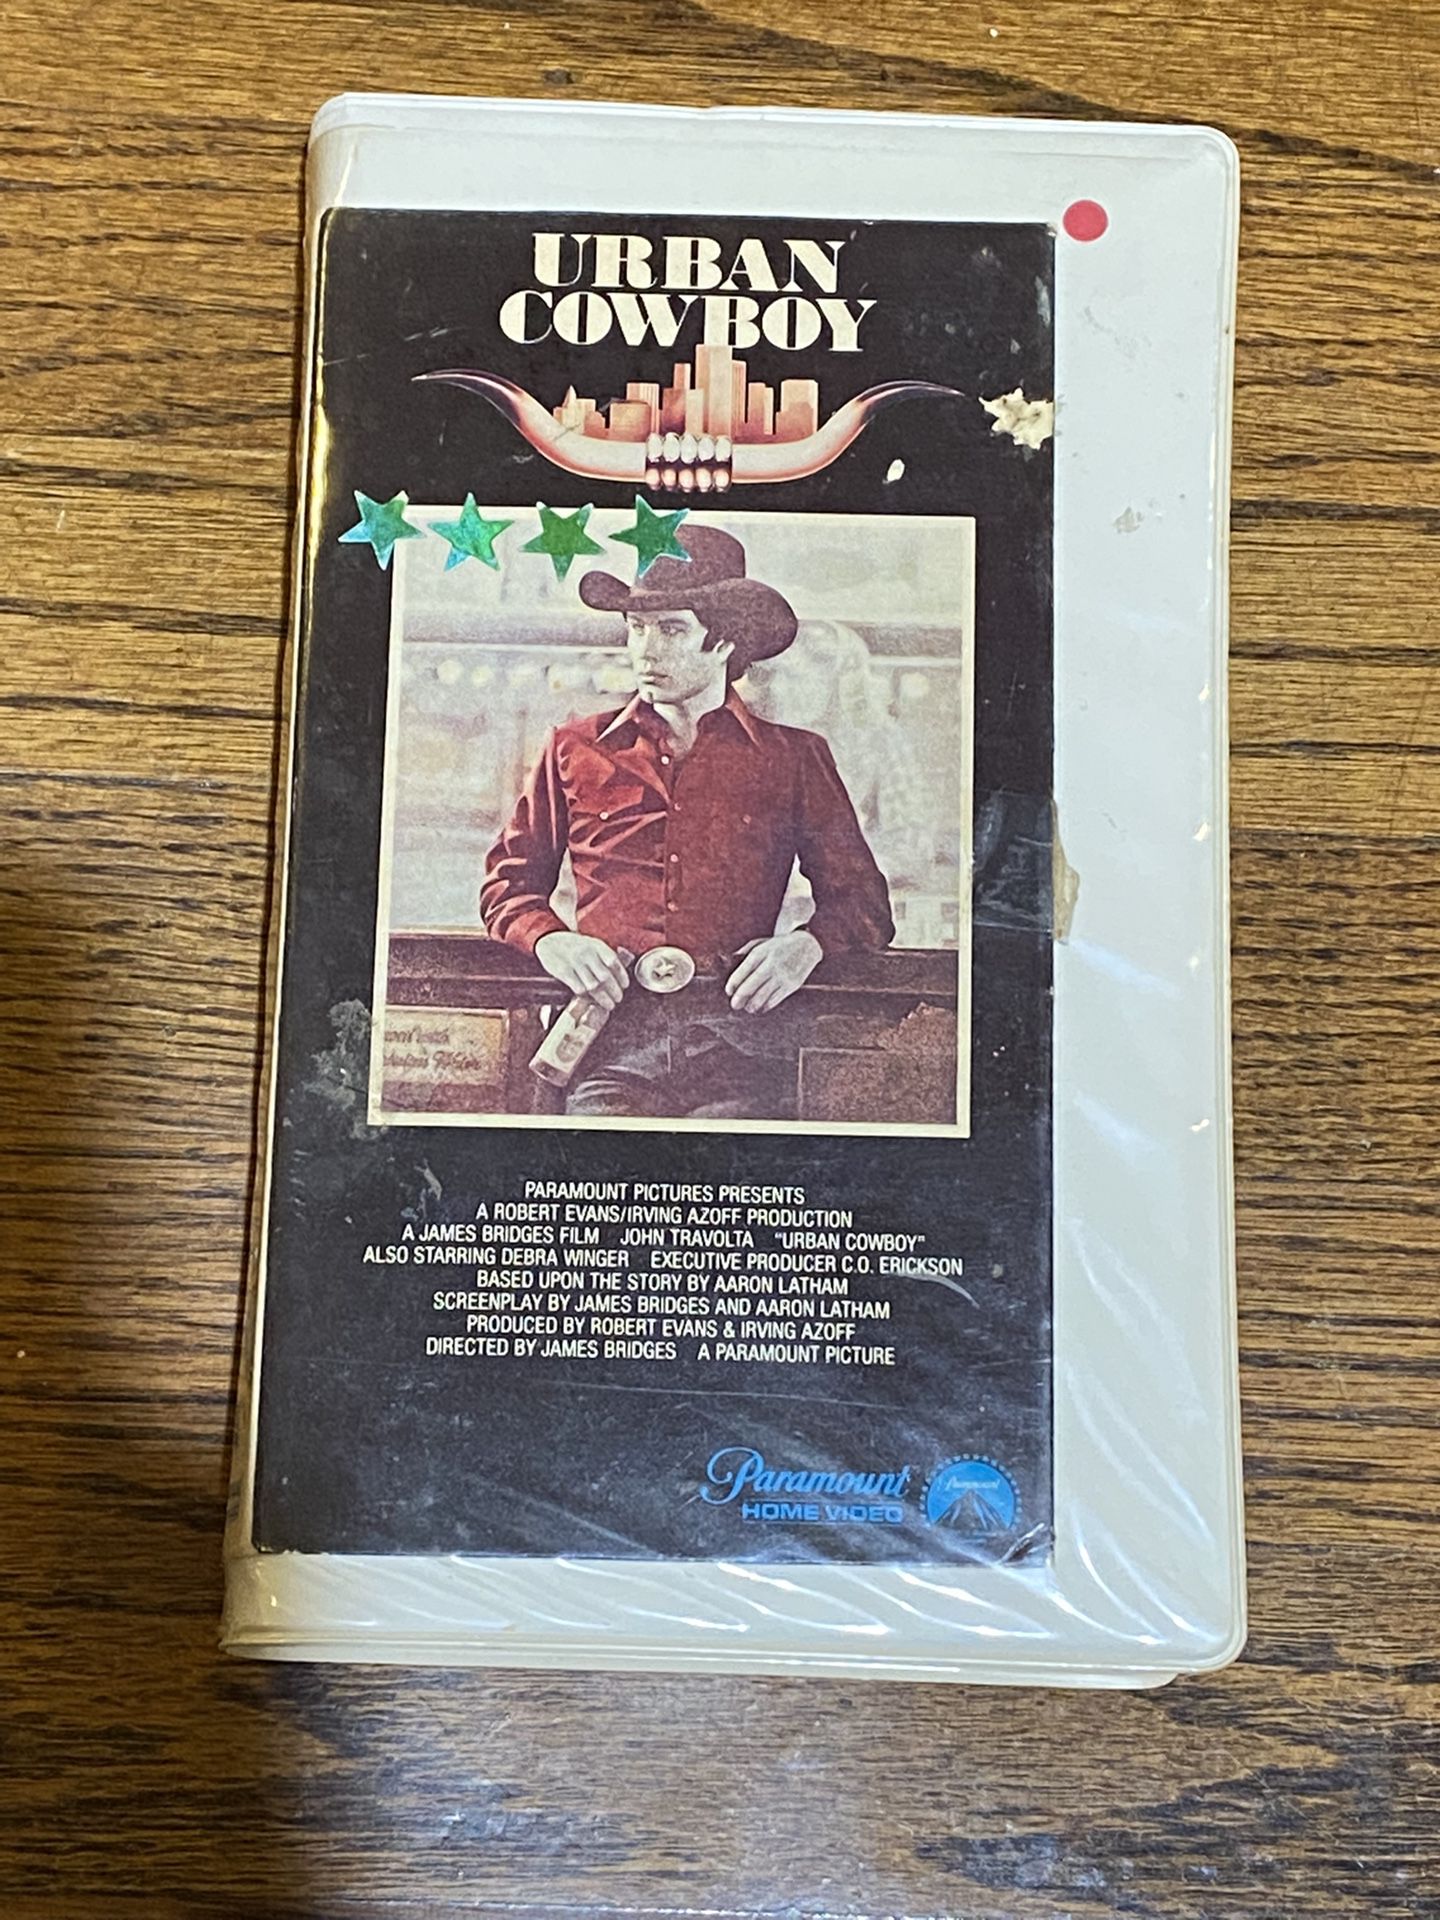 VINTAGE VHS URBAN COWBOY